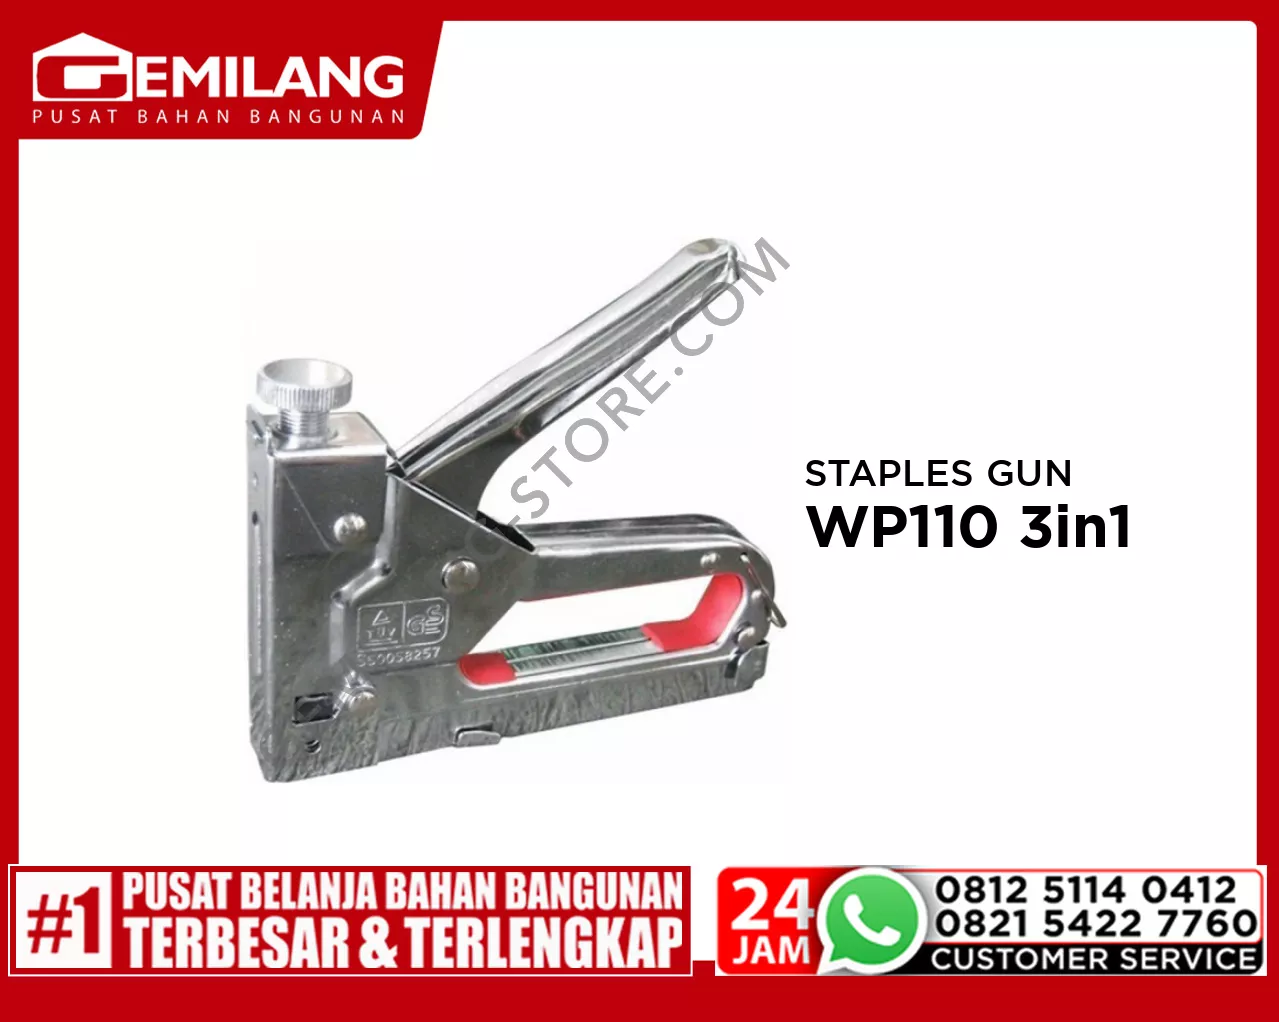 WIPRO STAPLES GUN WP110 (3in1)